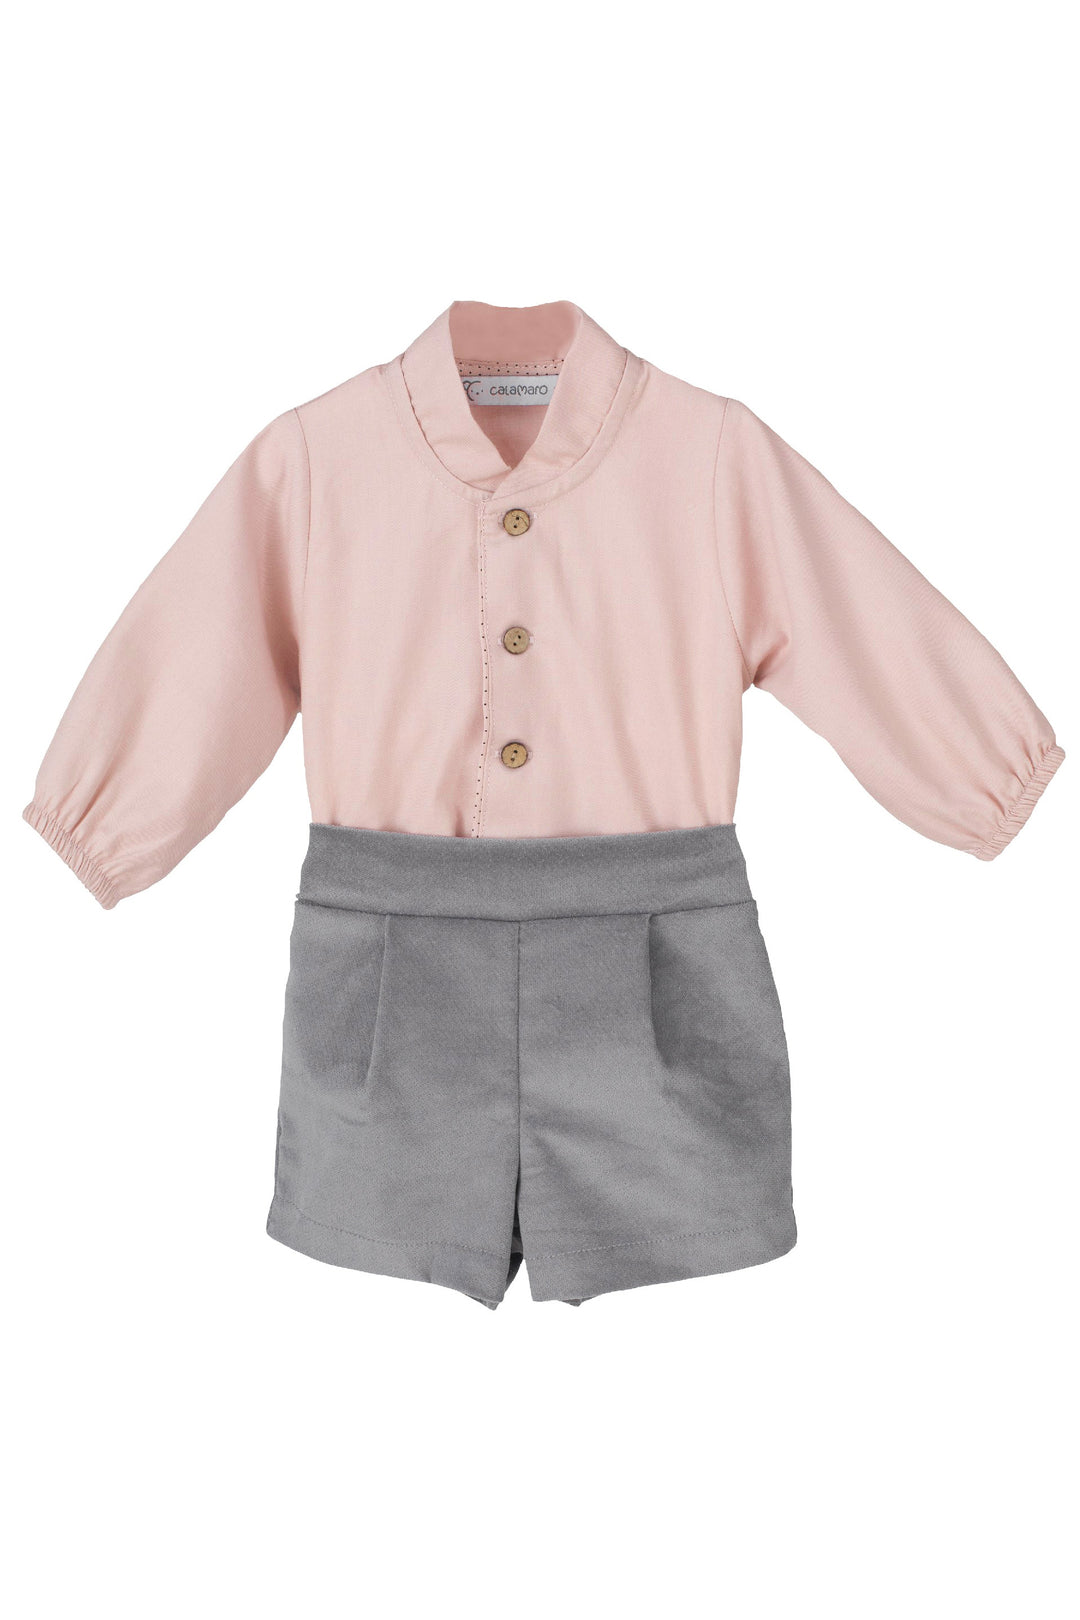 Calamaro Excellentt "Elijah" Dusky Pink Shirt & Grey Velvet Shorts | Millie and John